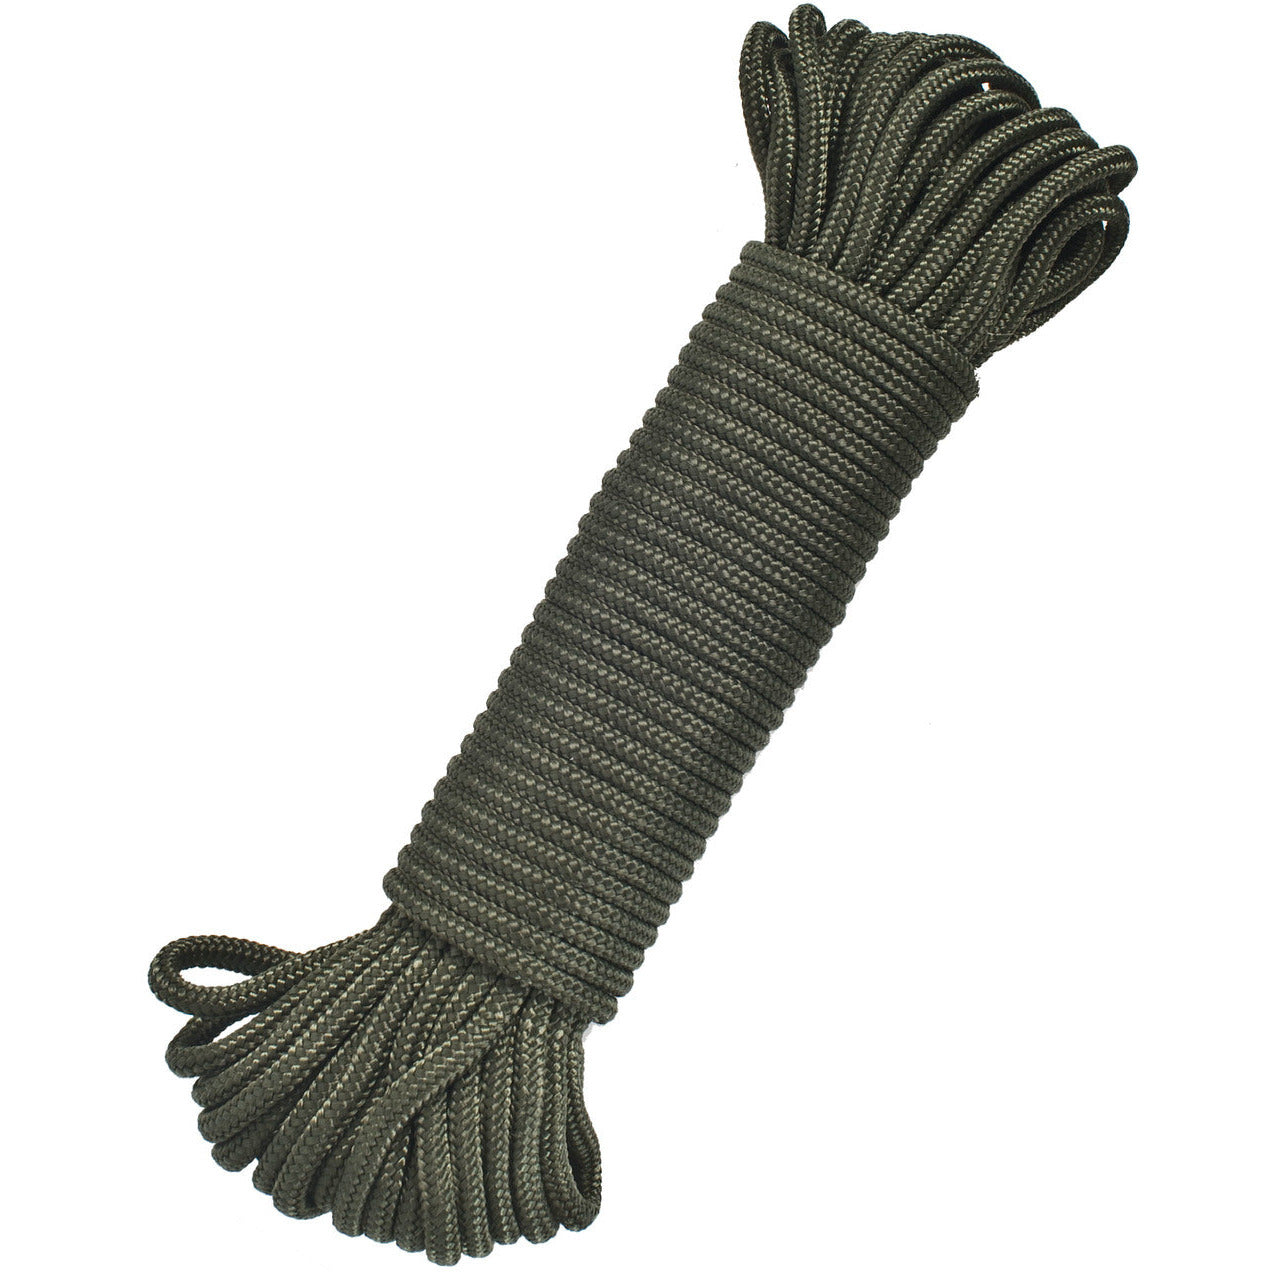 3mm x 21' Parachute Cord